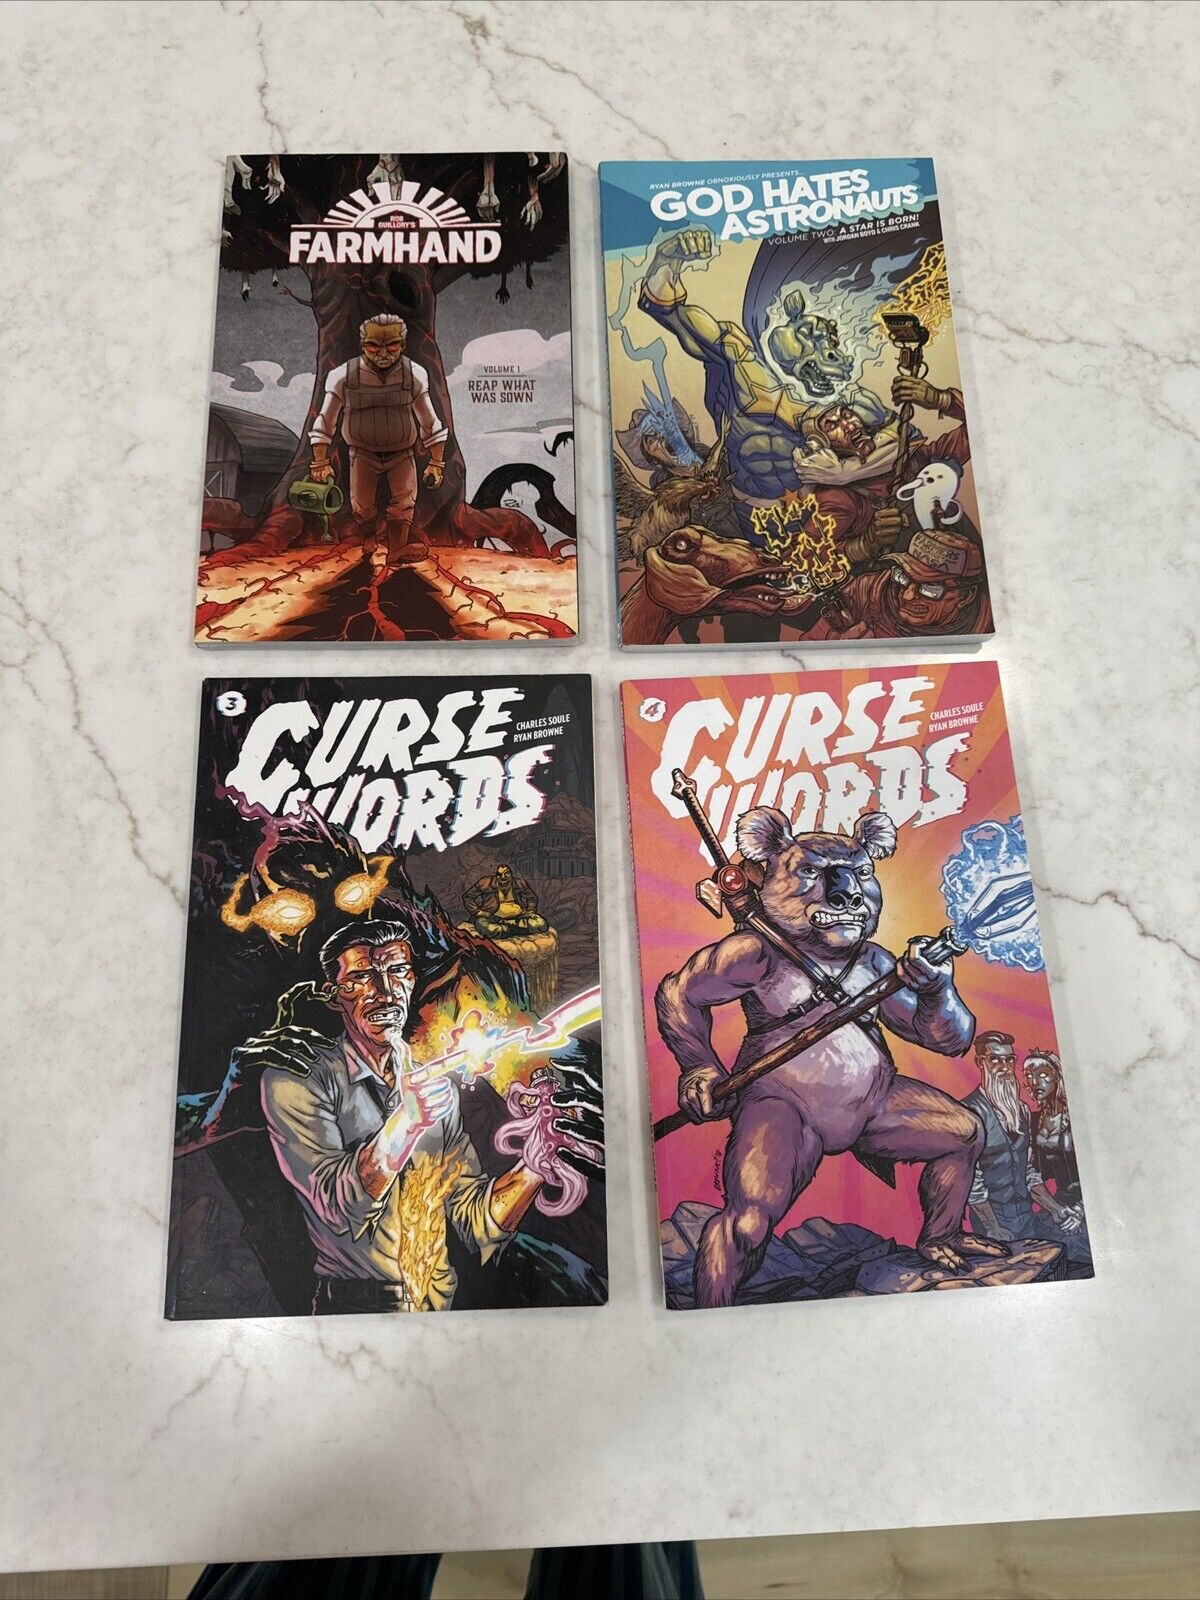 Lot 2 Curse Words 3 & 4 Graphic Novels Comic Book, Farmhand Vol 1 & GHA Vol 2